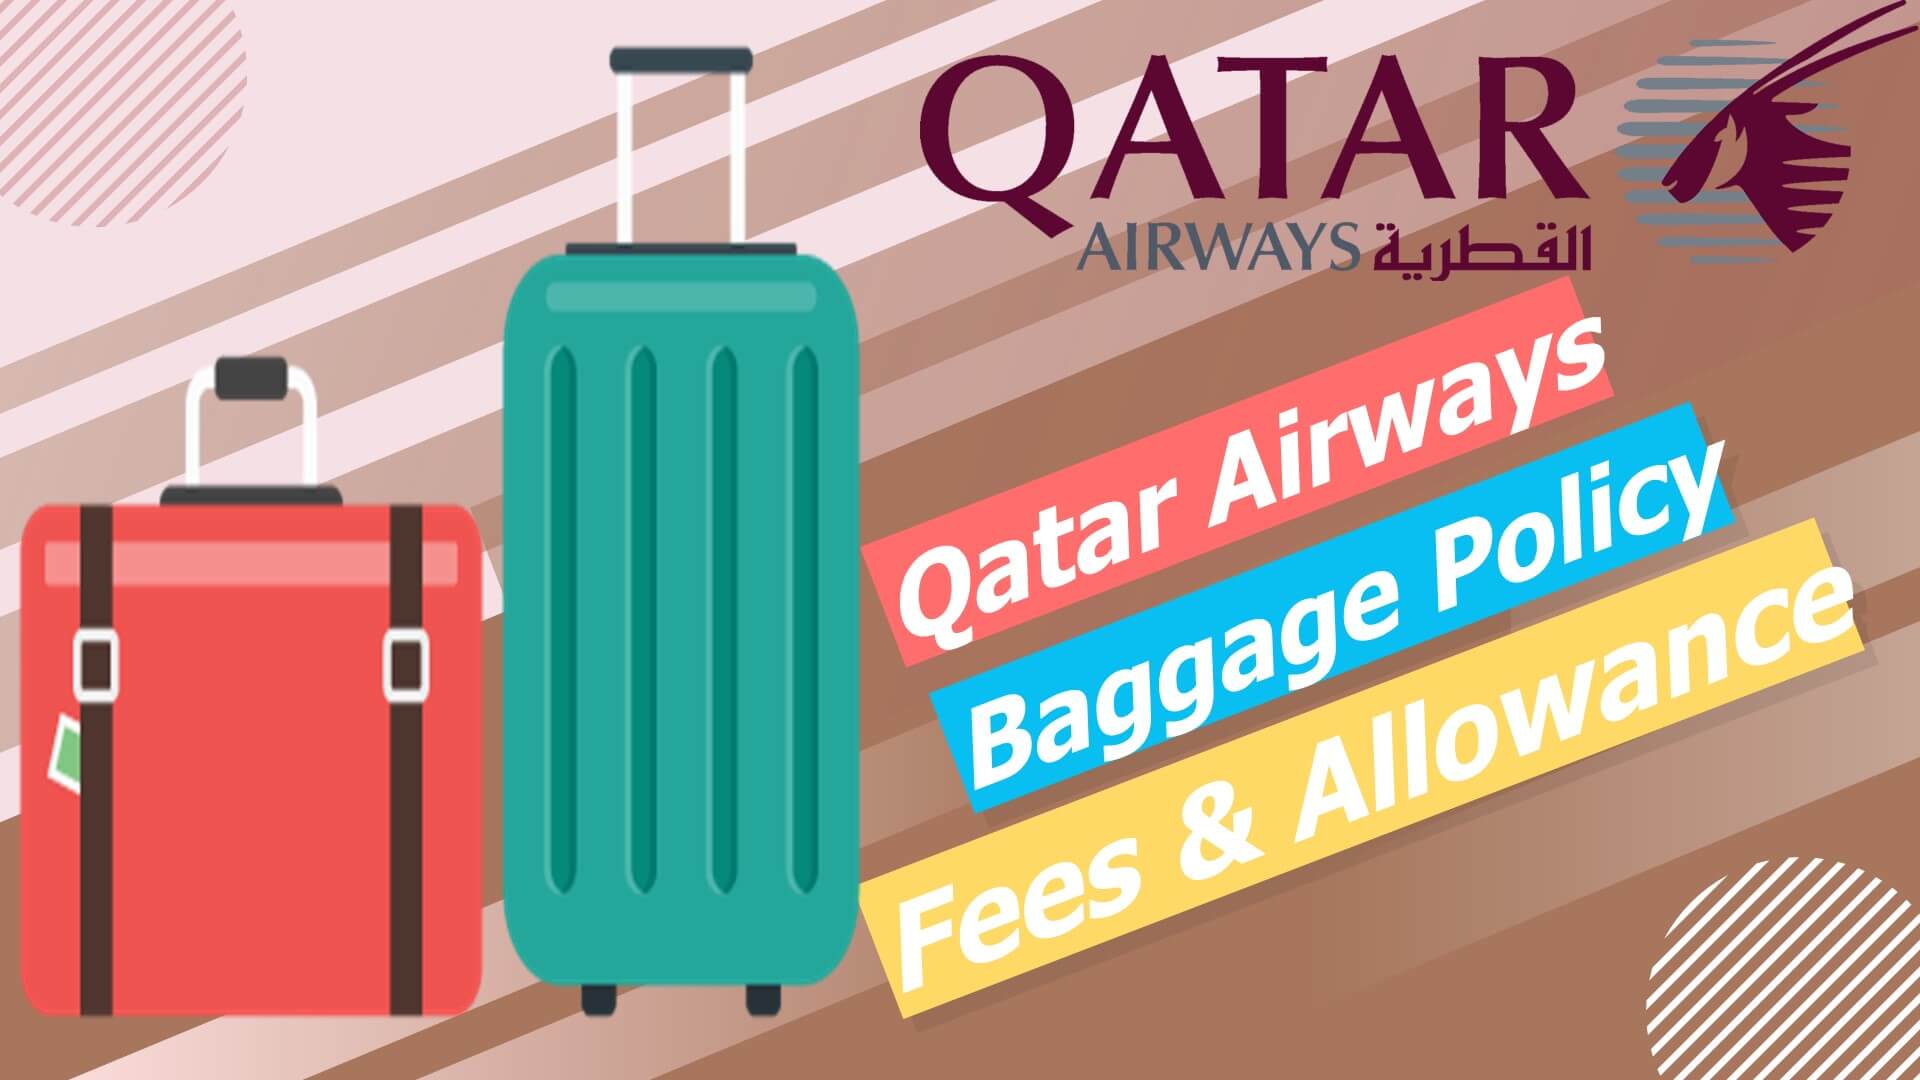 check my trip on qatar airways